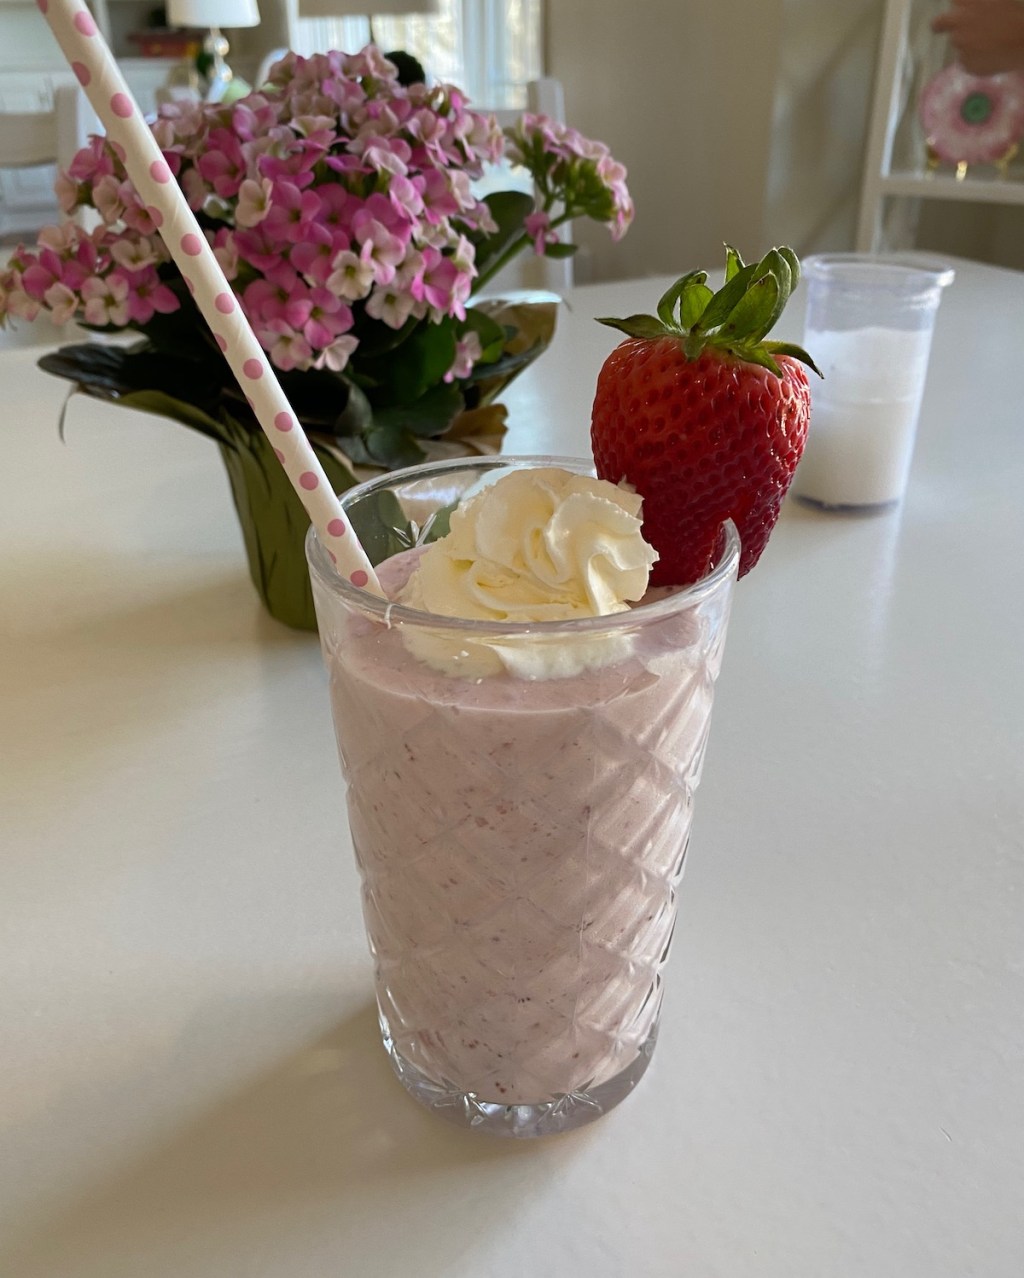 strawberry milkshake on table